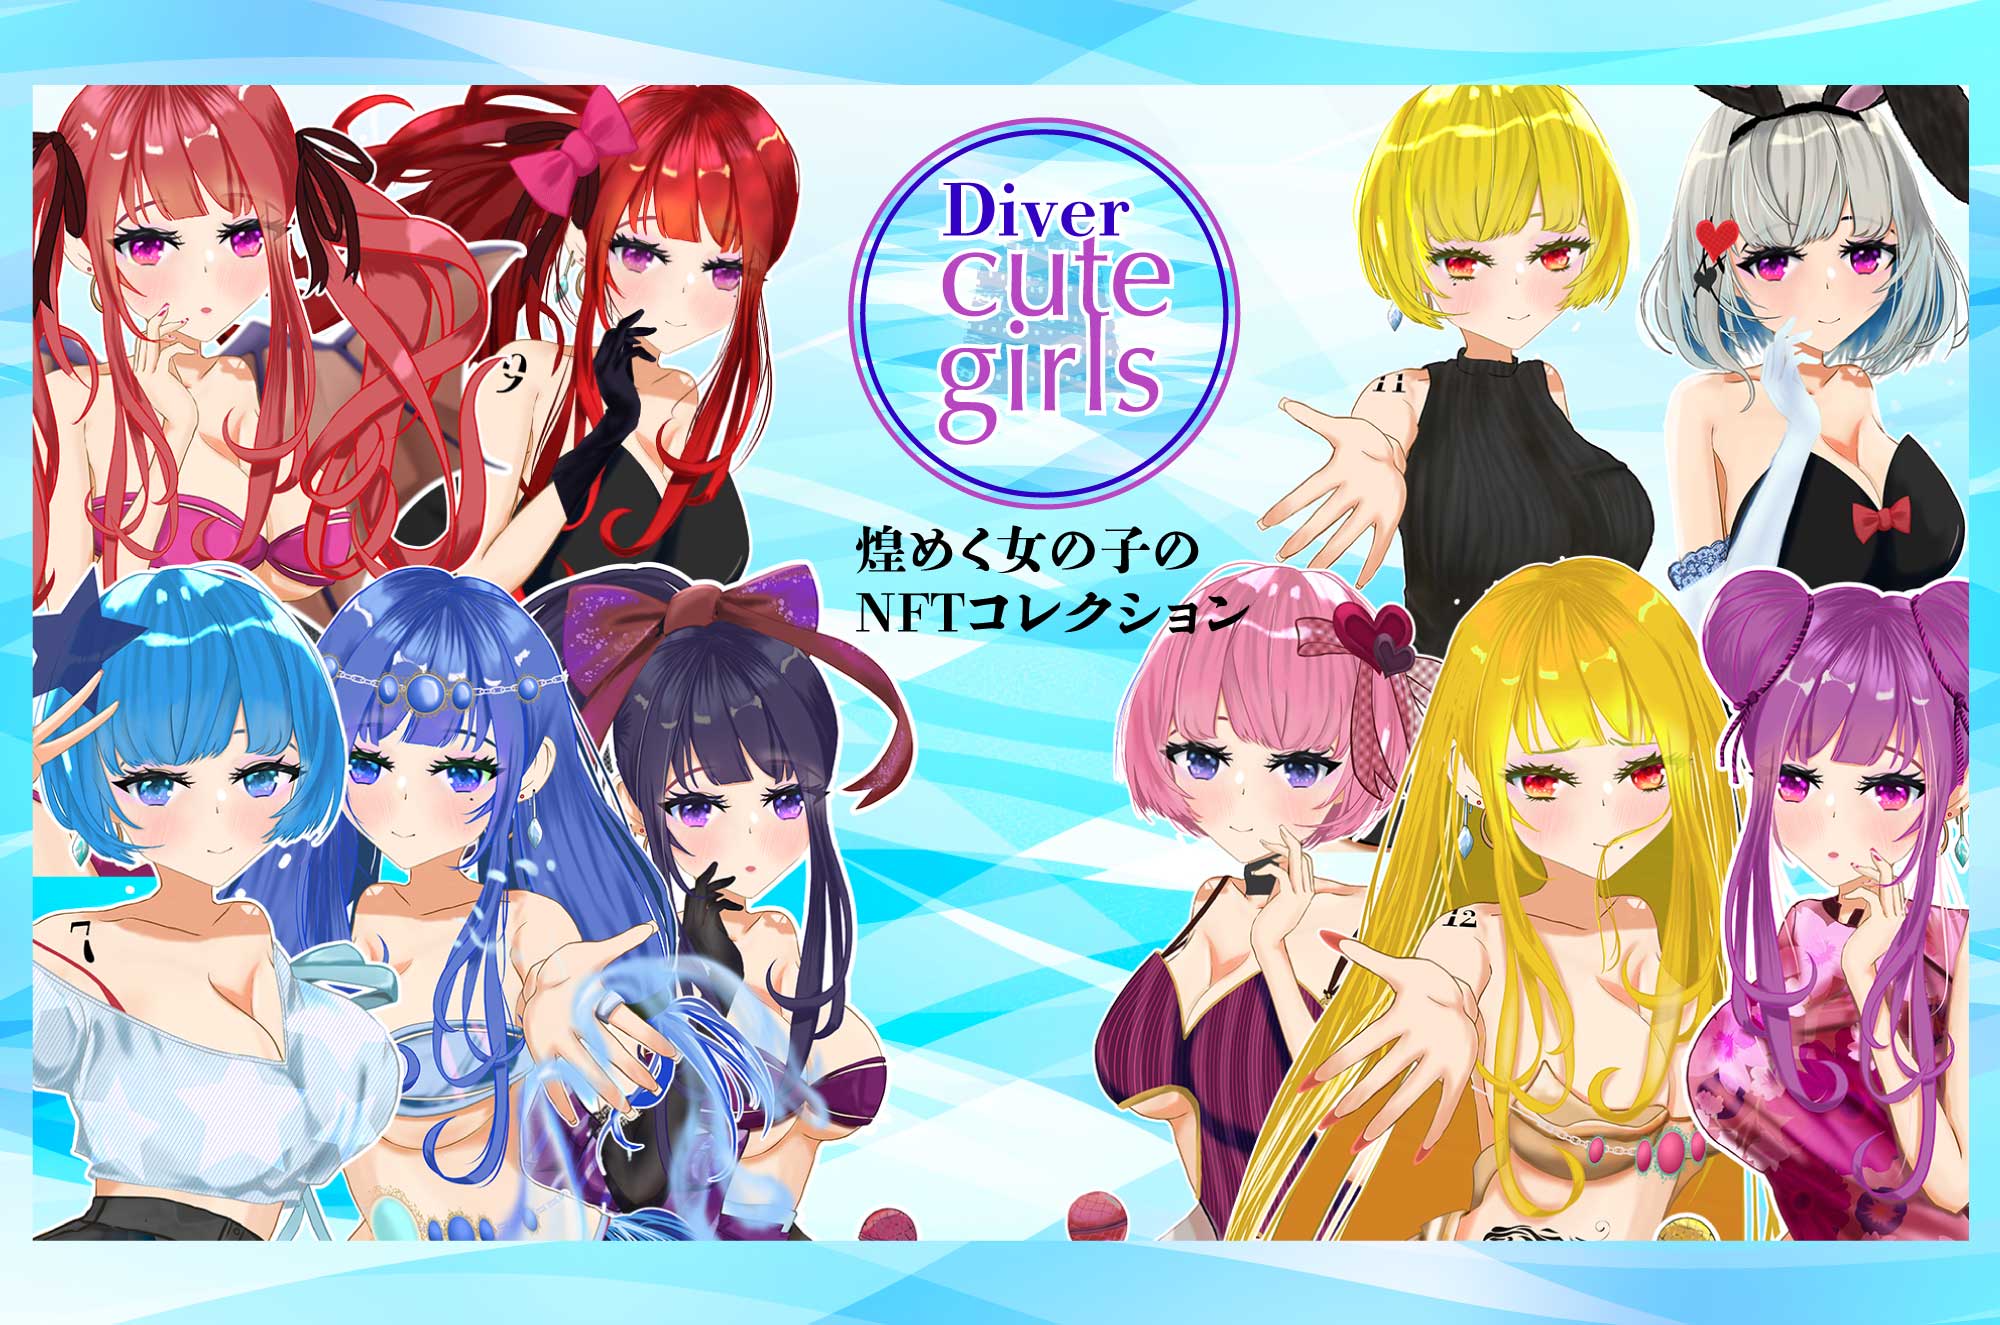 Diver cute girls NFTコレクション